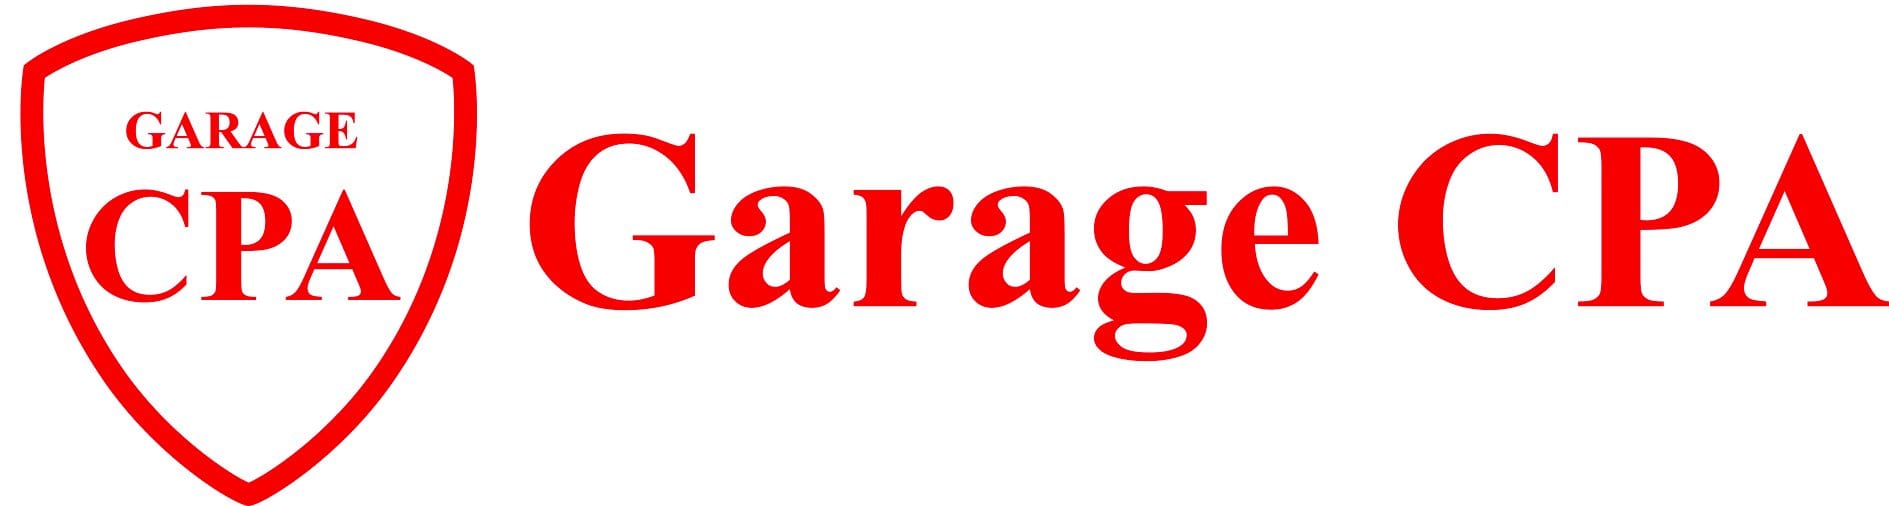 logo garage CPA